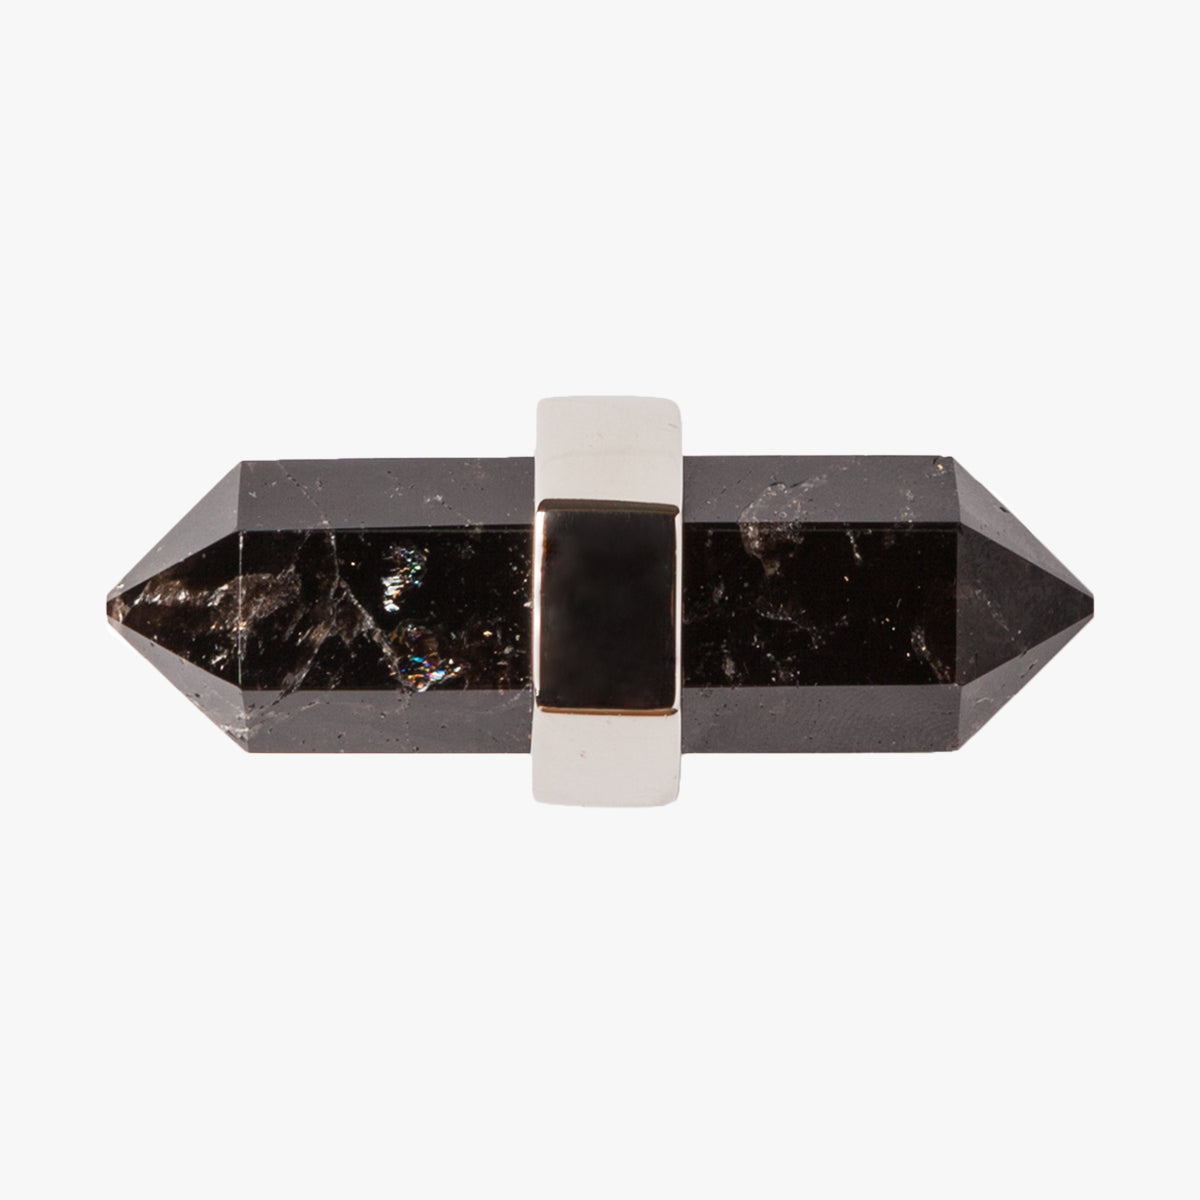 Freya Knob/Pull handmade in smokey quartz crystal and polished nickel by Matthew Studios